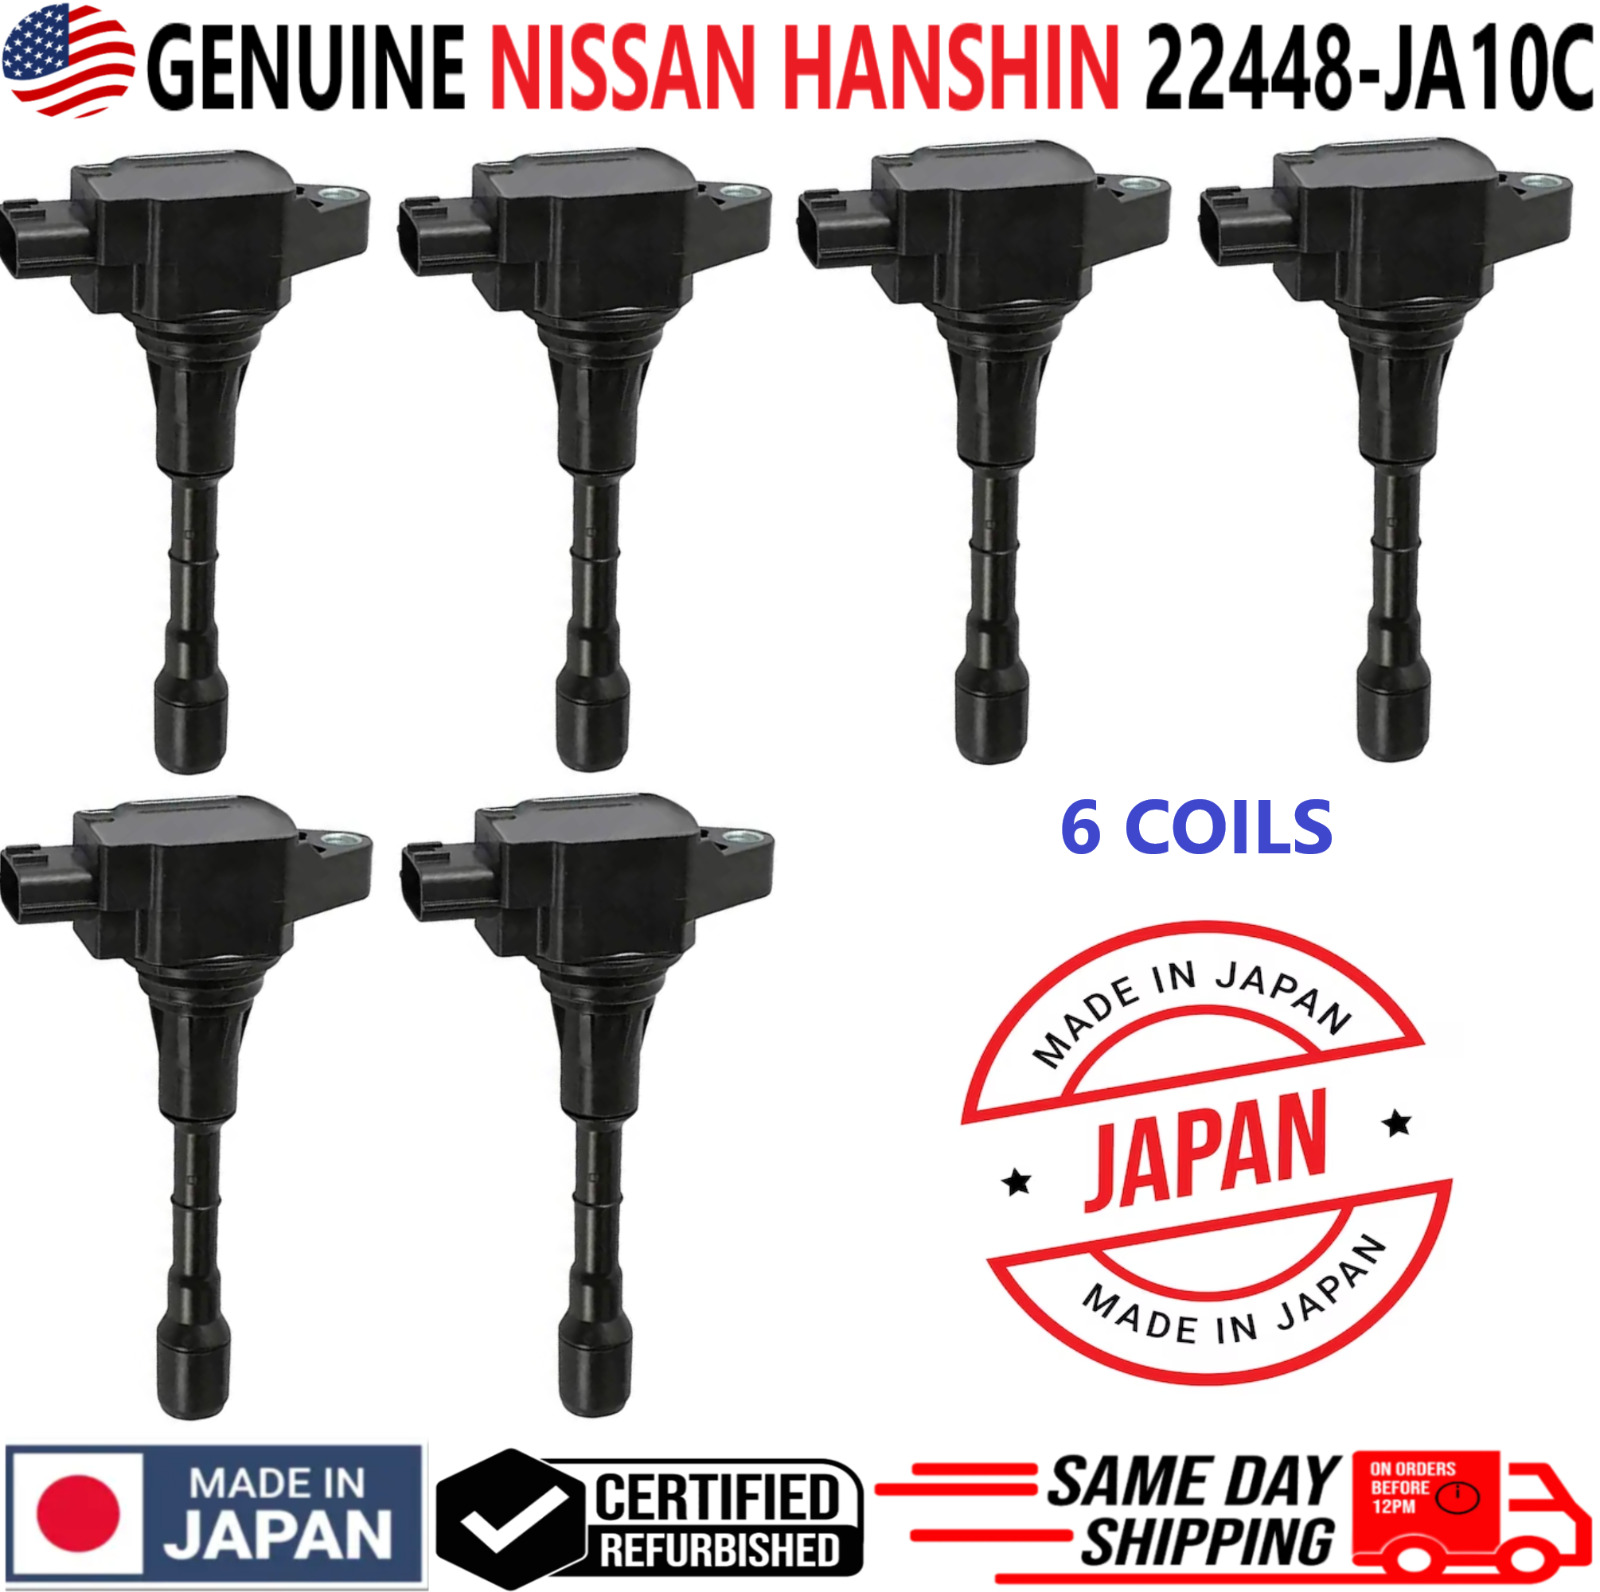 GENUINE Nissan x6 Ignition Coils For 2007-2017 Nissan & Infiniti V6, 22448-JA10C